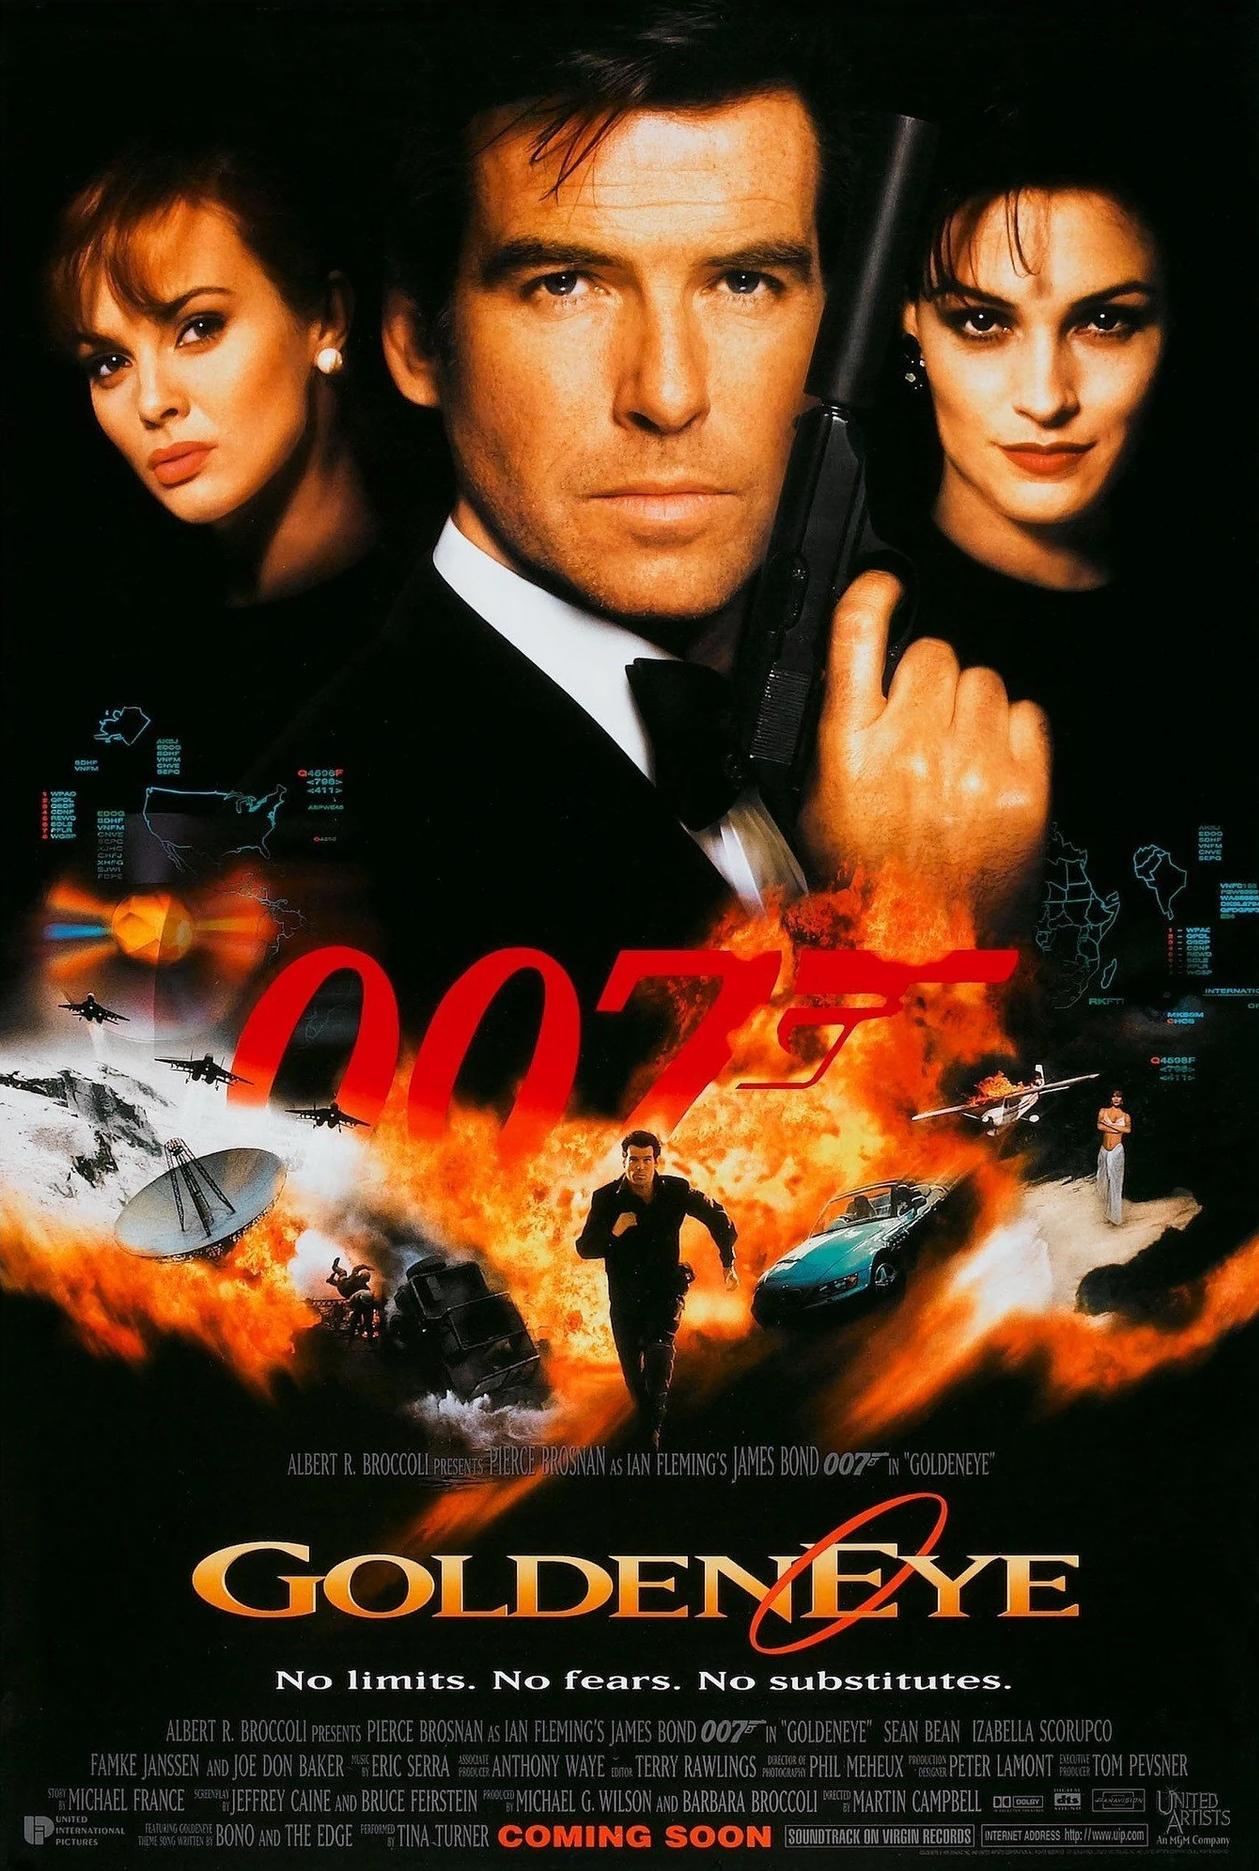 A 'GoldenEye 007' fan remake is dead after a cease and desist demand